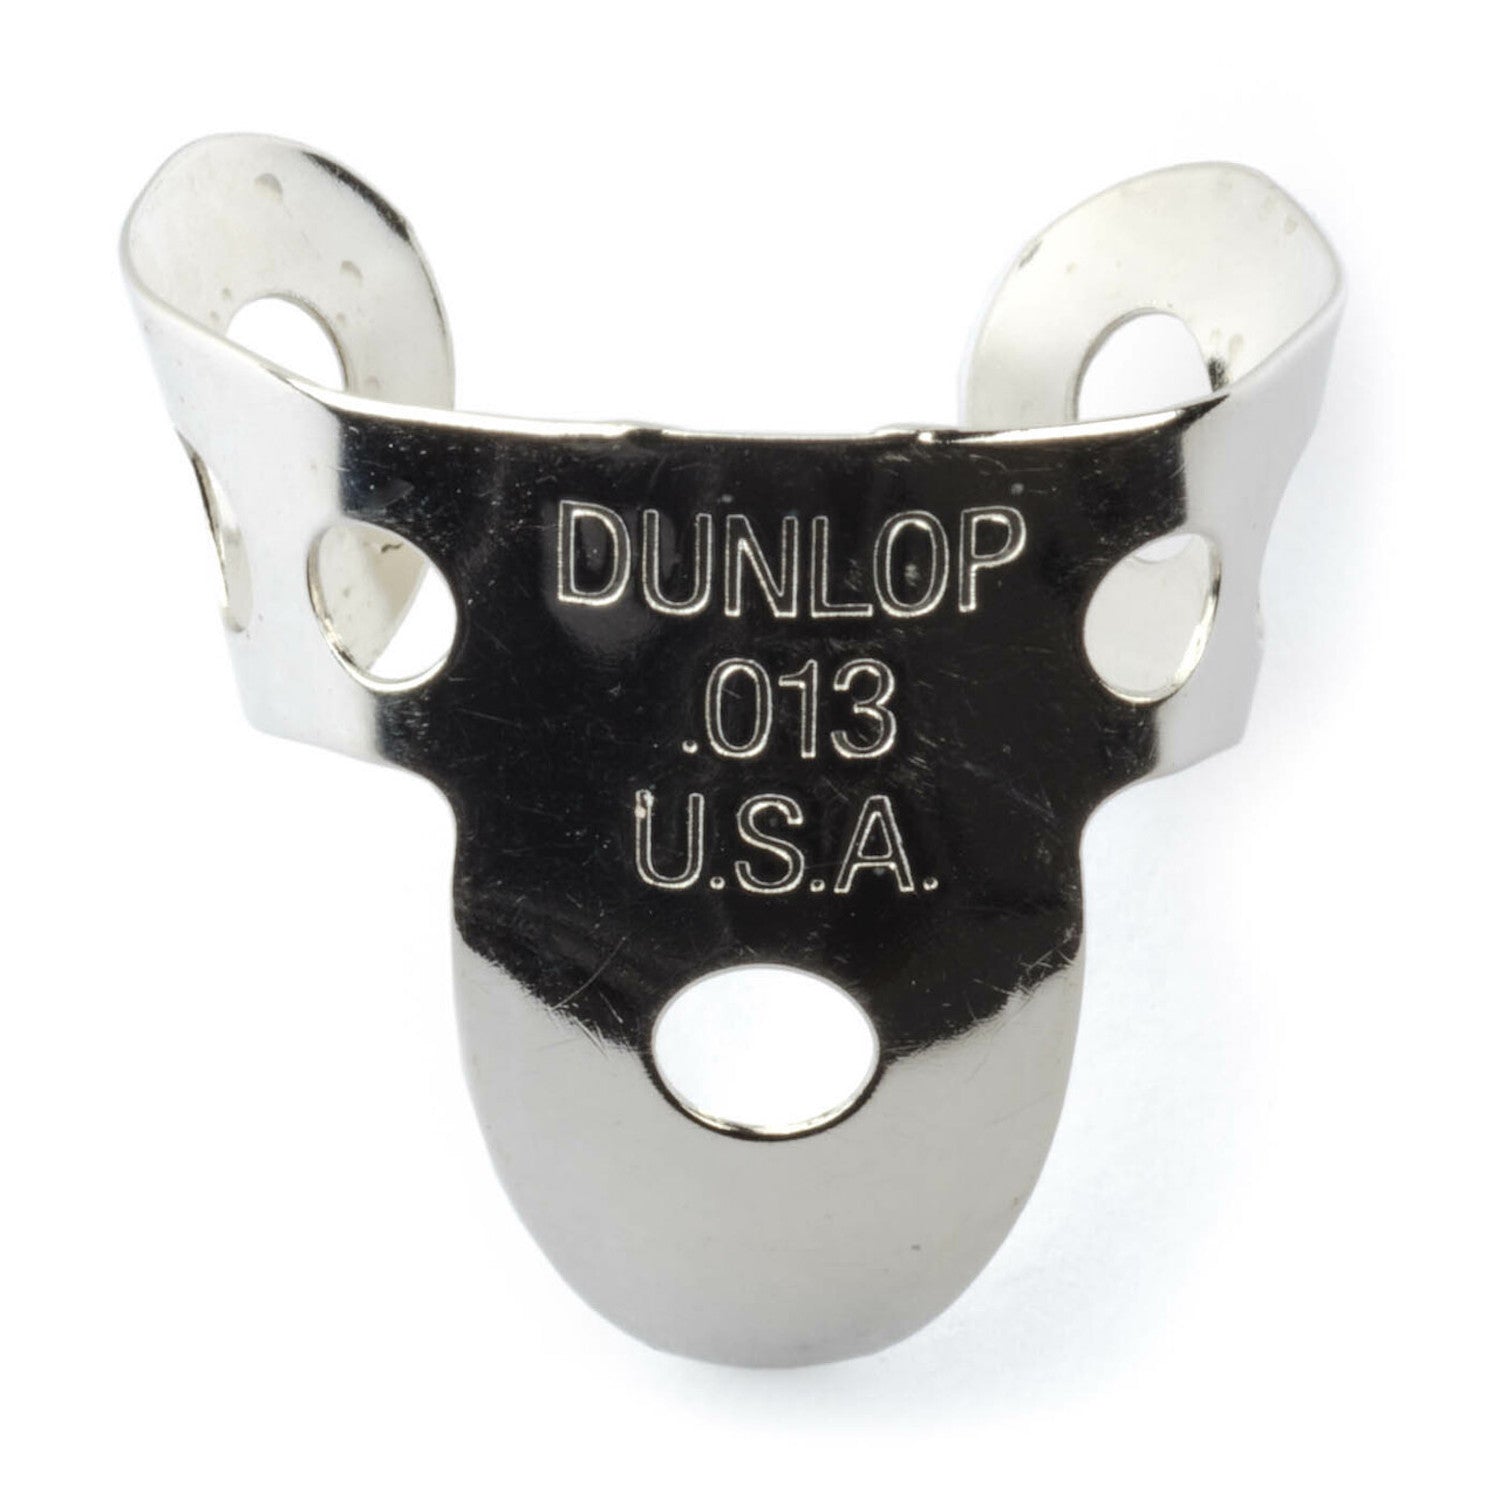 Dunlop .013" Nickel Fingerpick